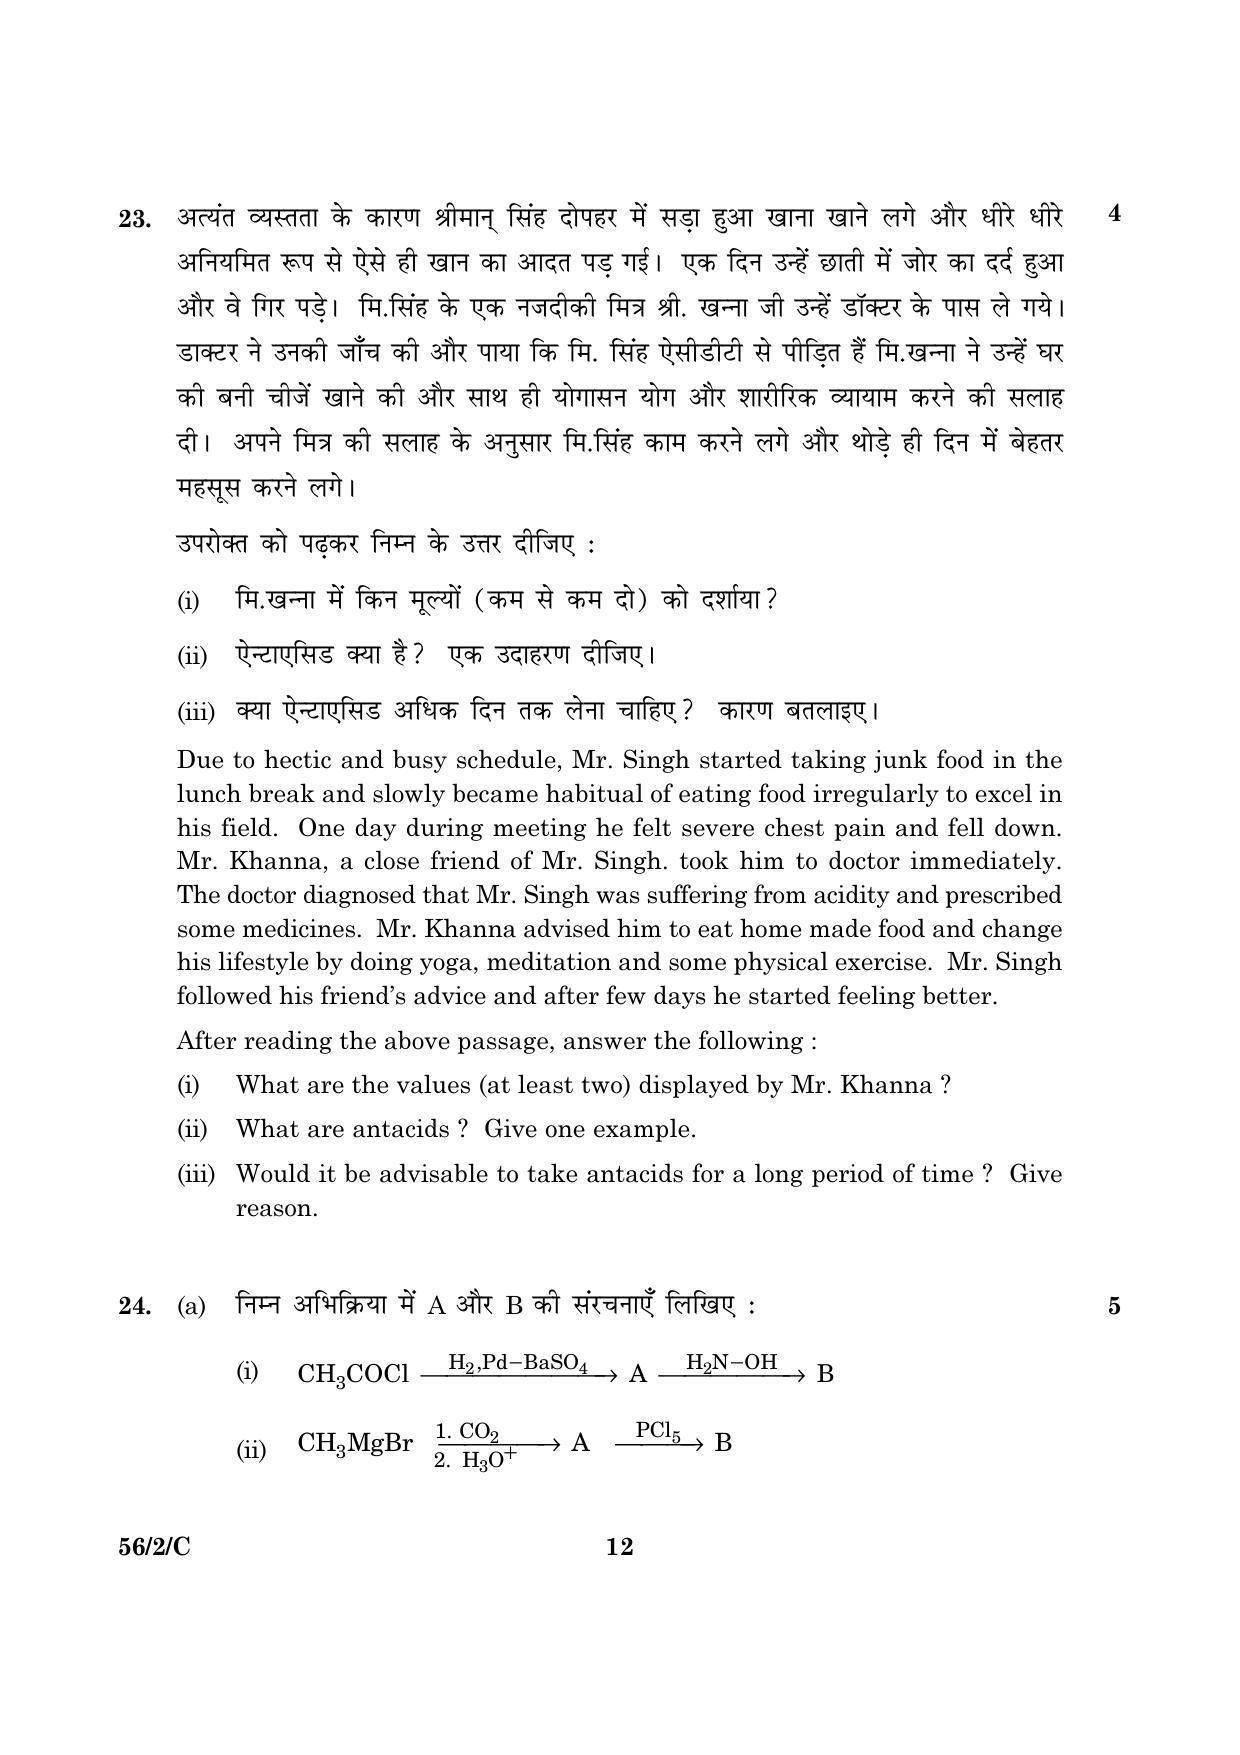 CBSE Class 12 056 Set 2 C Chemistry 2016 Question Paper - Page 12